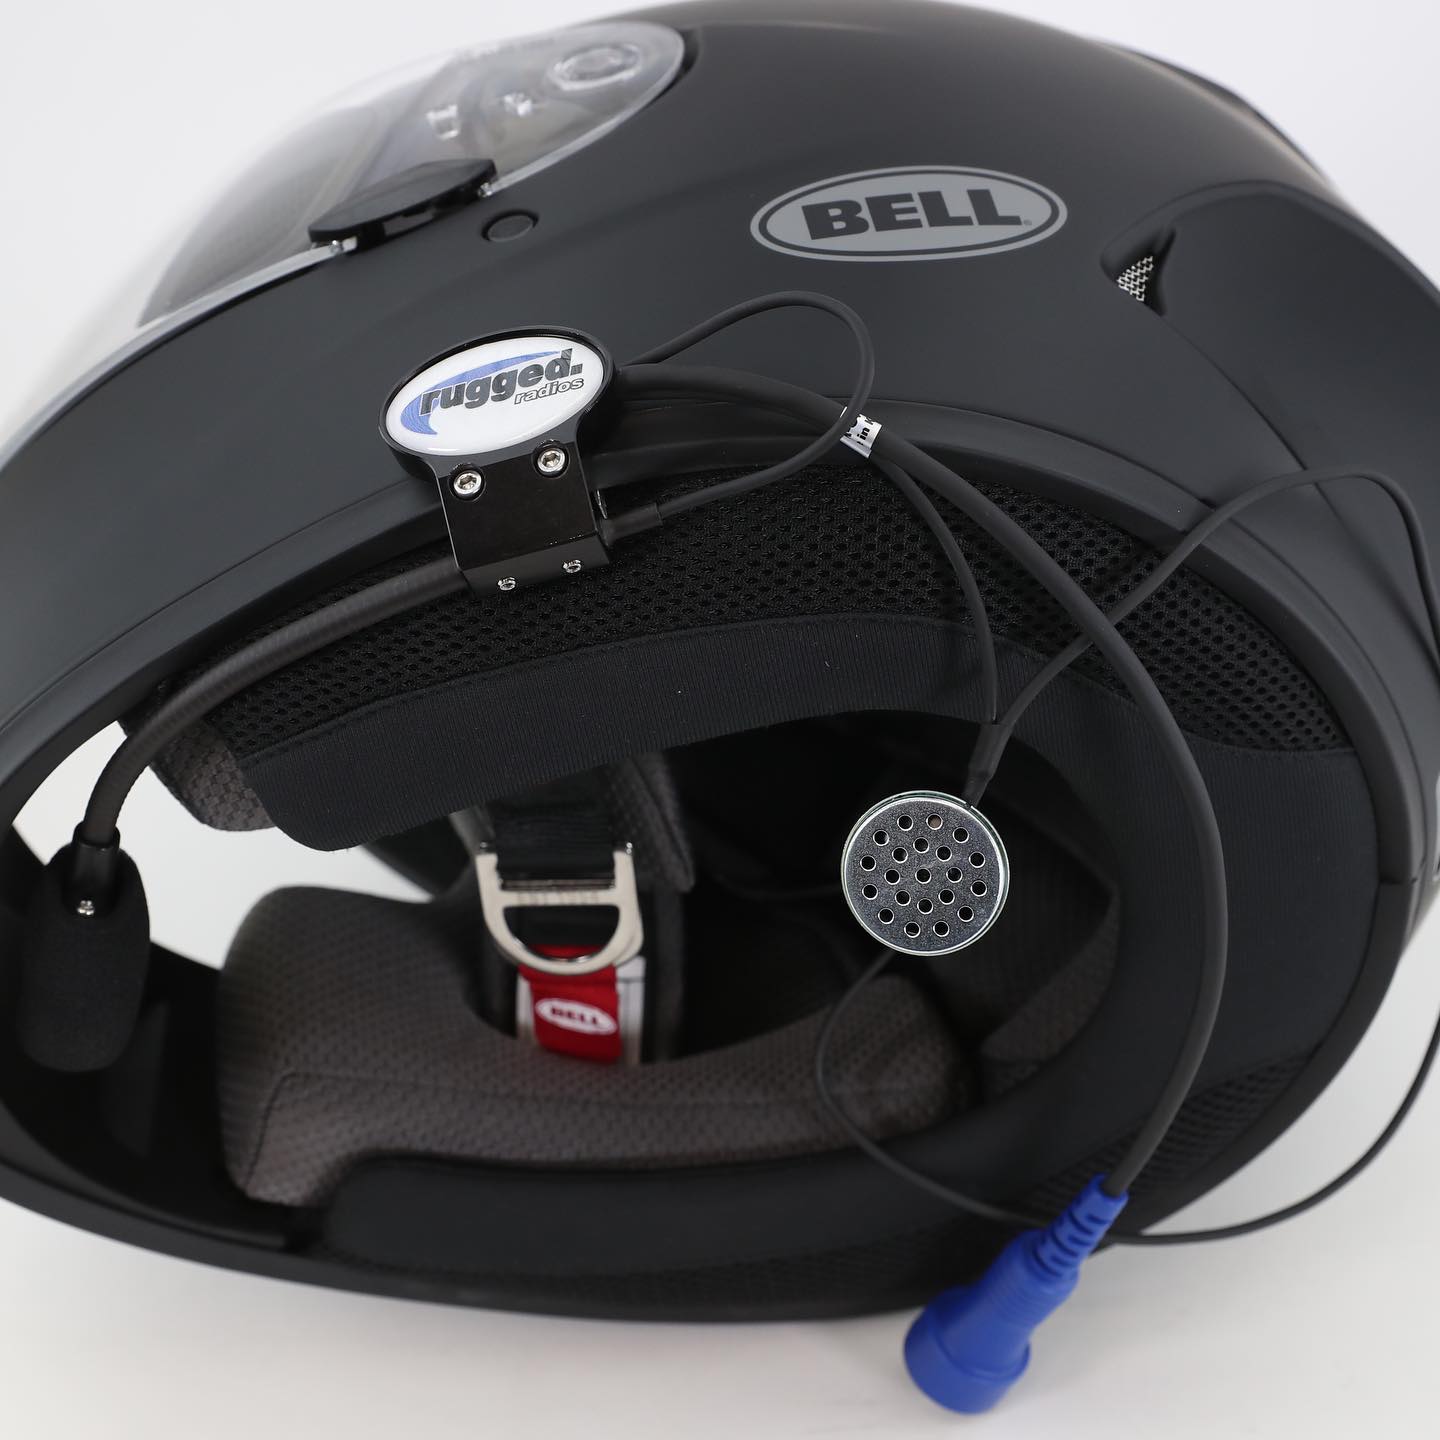 Quick Install Helmet Kit Mount